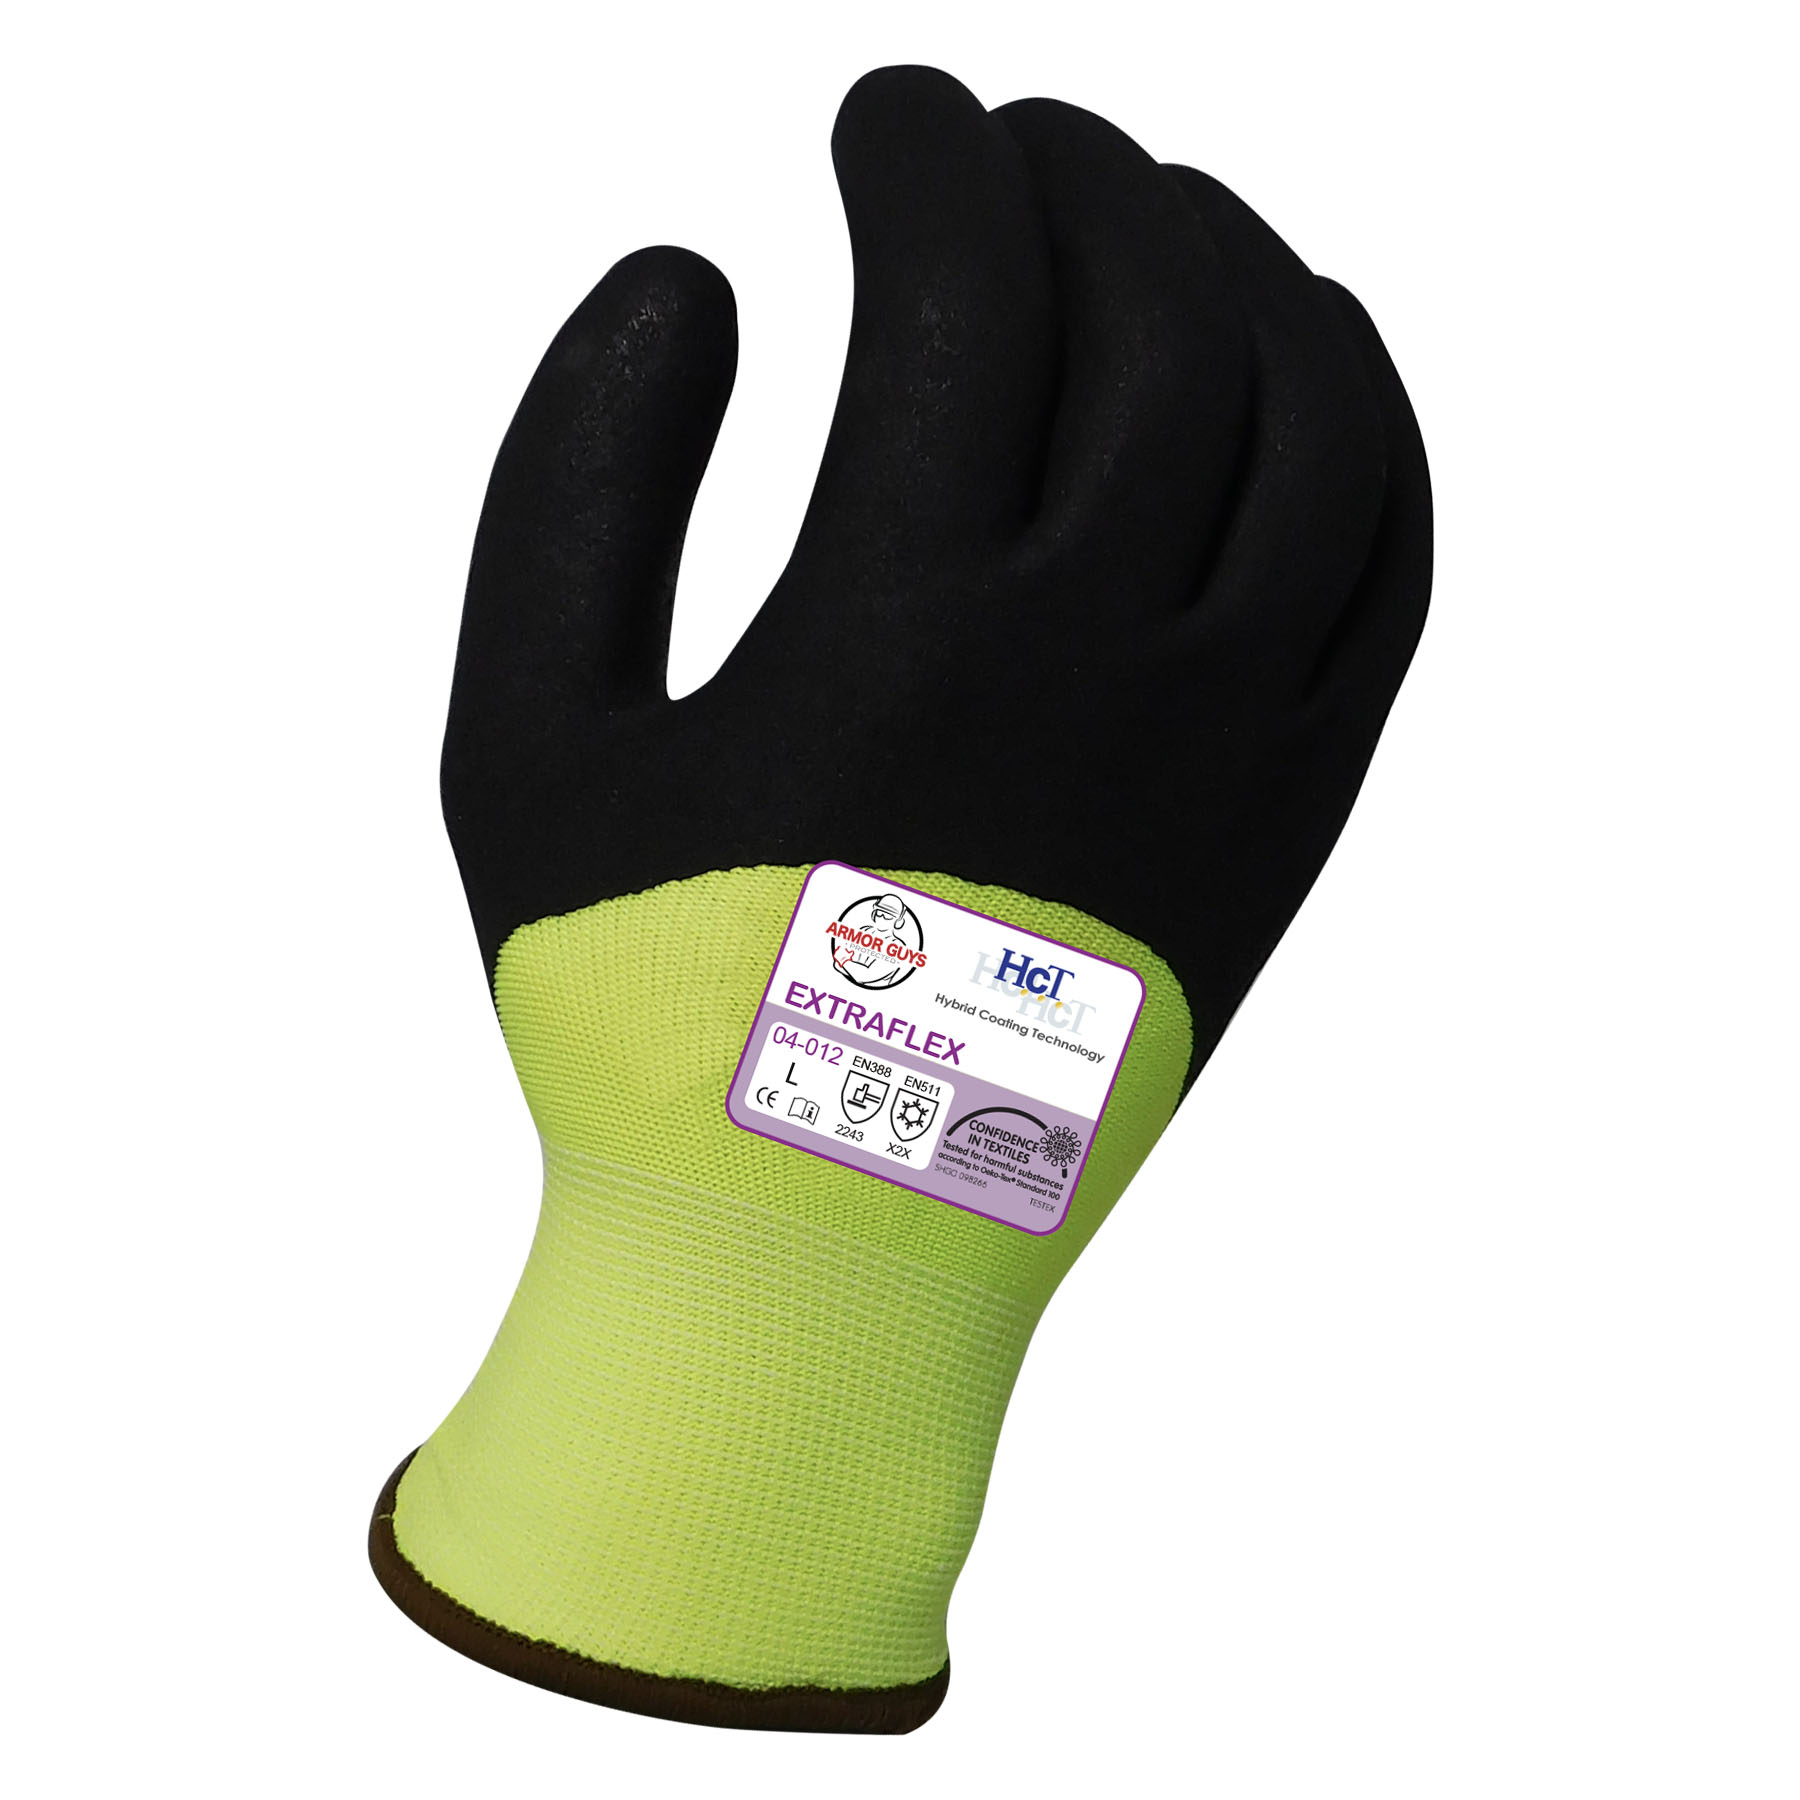 Armor Guys Extraflex® Gloves - Spill Control